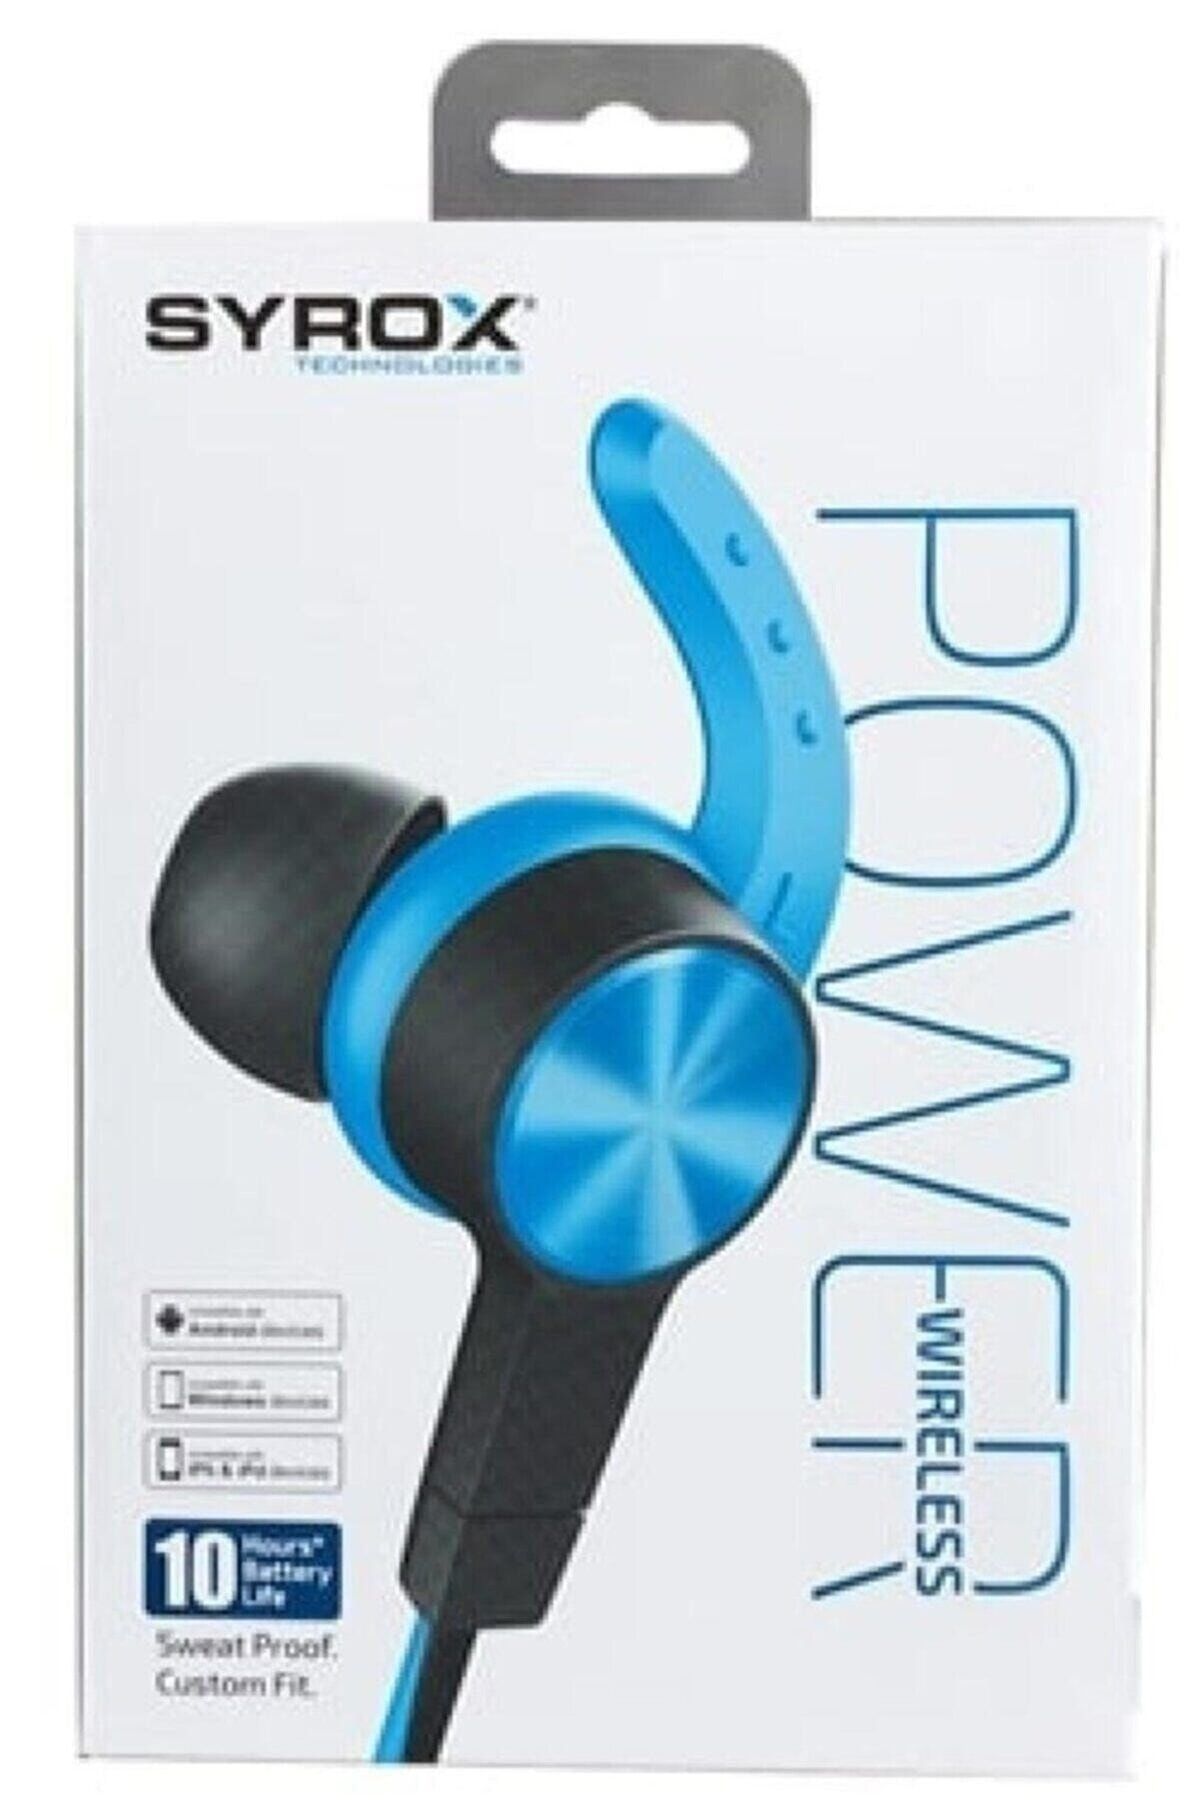 Syrox S32 Çift Bataryalı Bluetooth'lu Kulakiçi Spor Kulaklık Mıknatıslı S32- Mavi